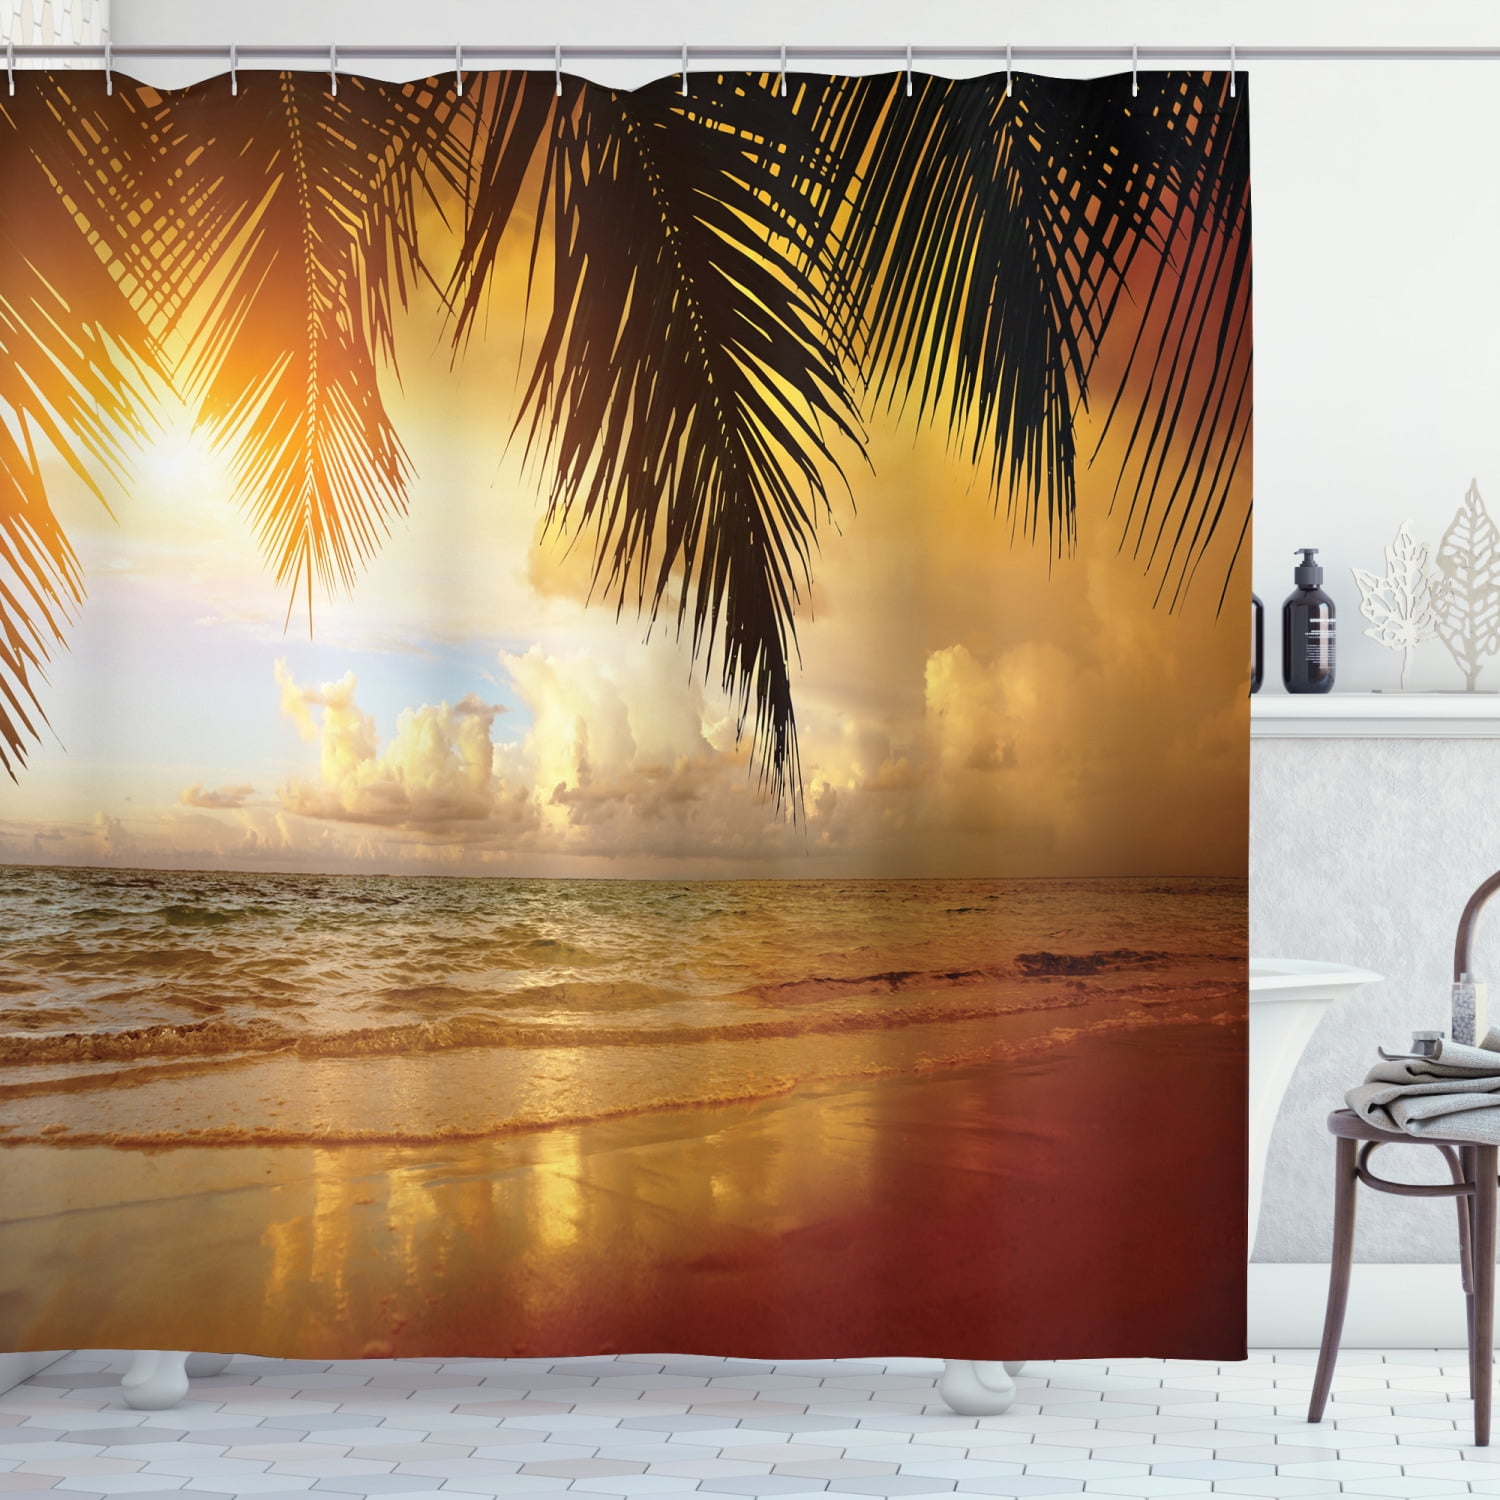 Sunset Sea  Print  Waterproof Bathroom Fabric Shower Curtain With 12 Hook 